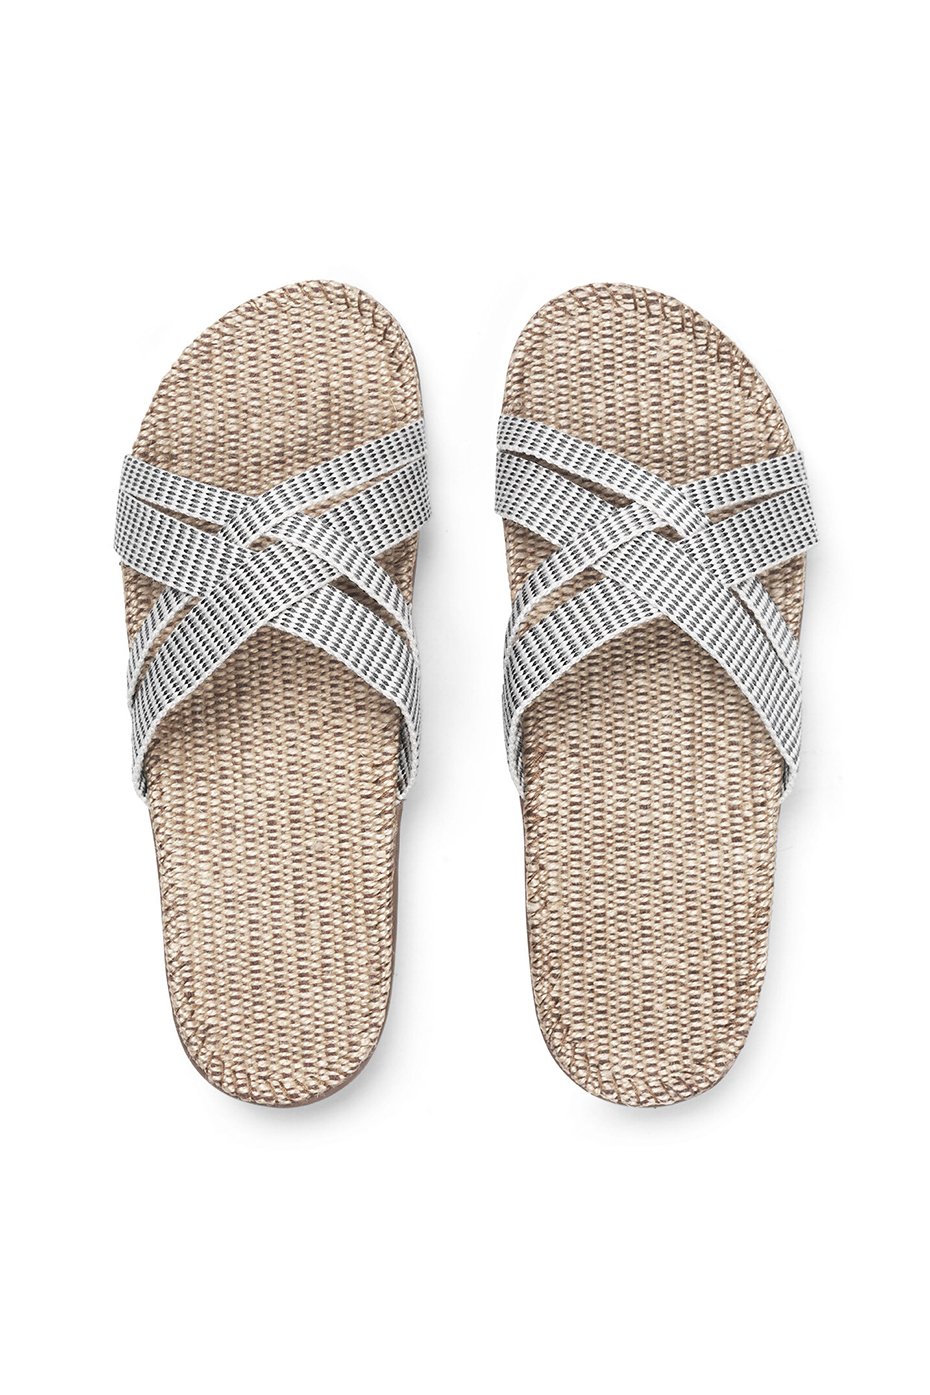 Shangies White Stripe Sandals